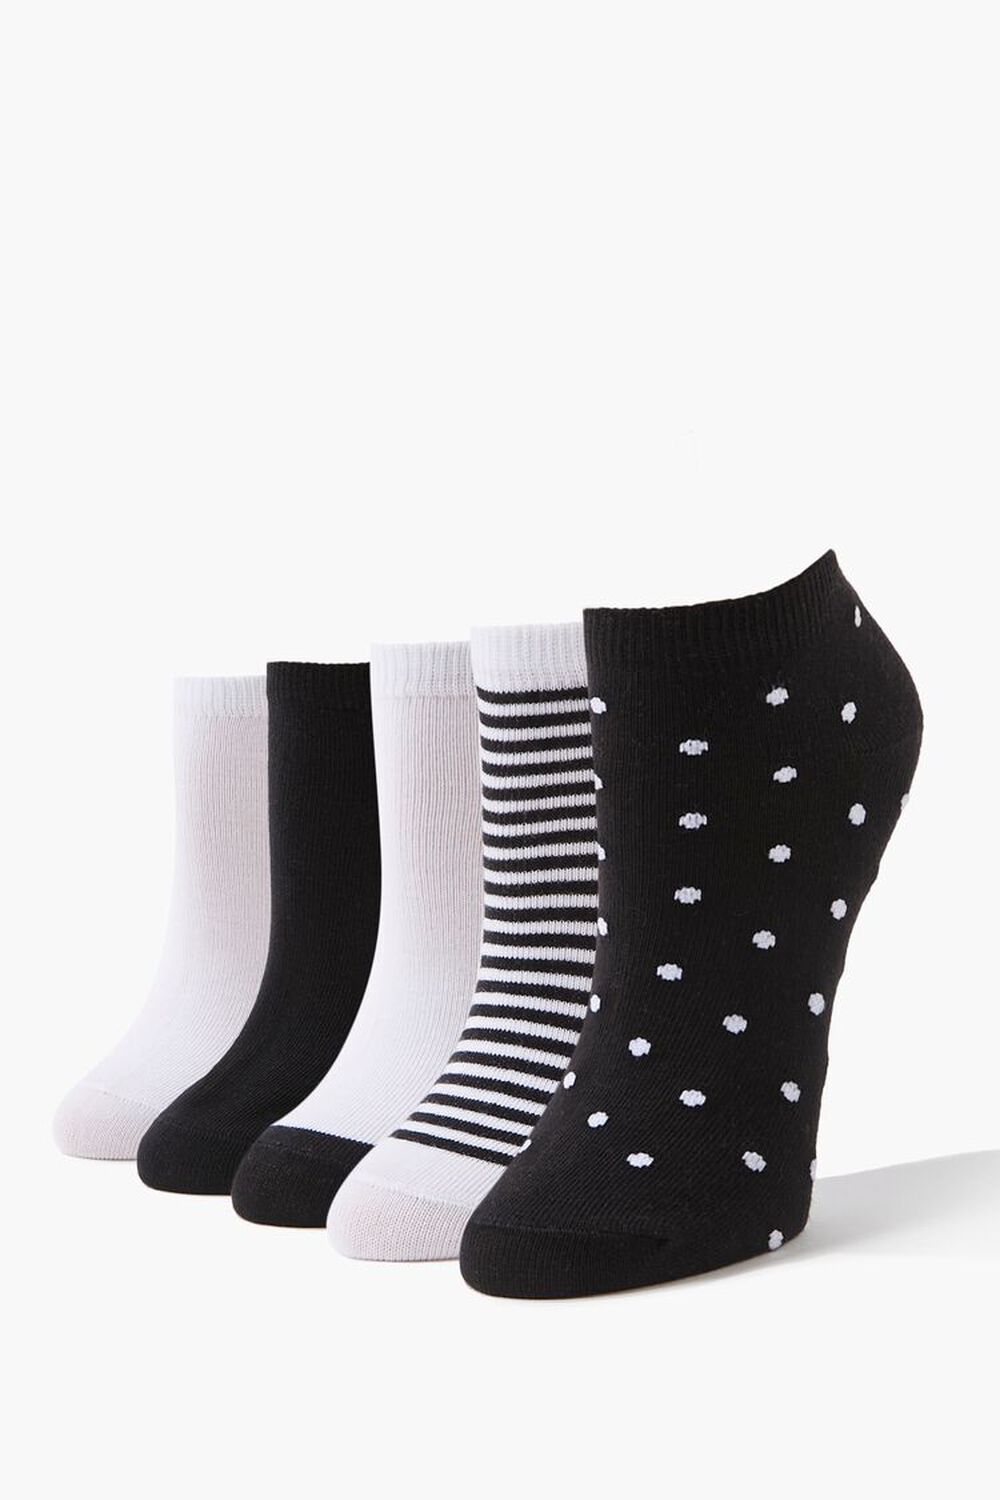 BLACK/WHITE Striped & Polka Dot Sock Set - 5 pack, image 1